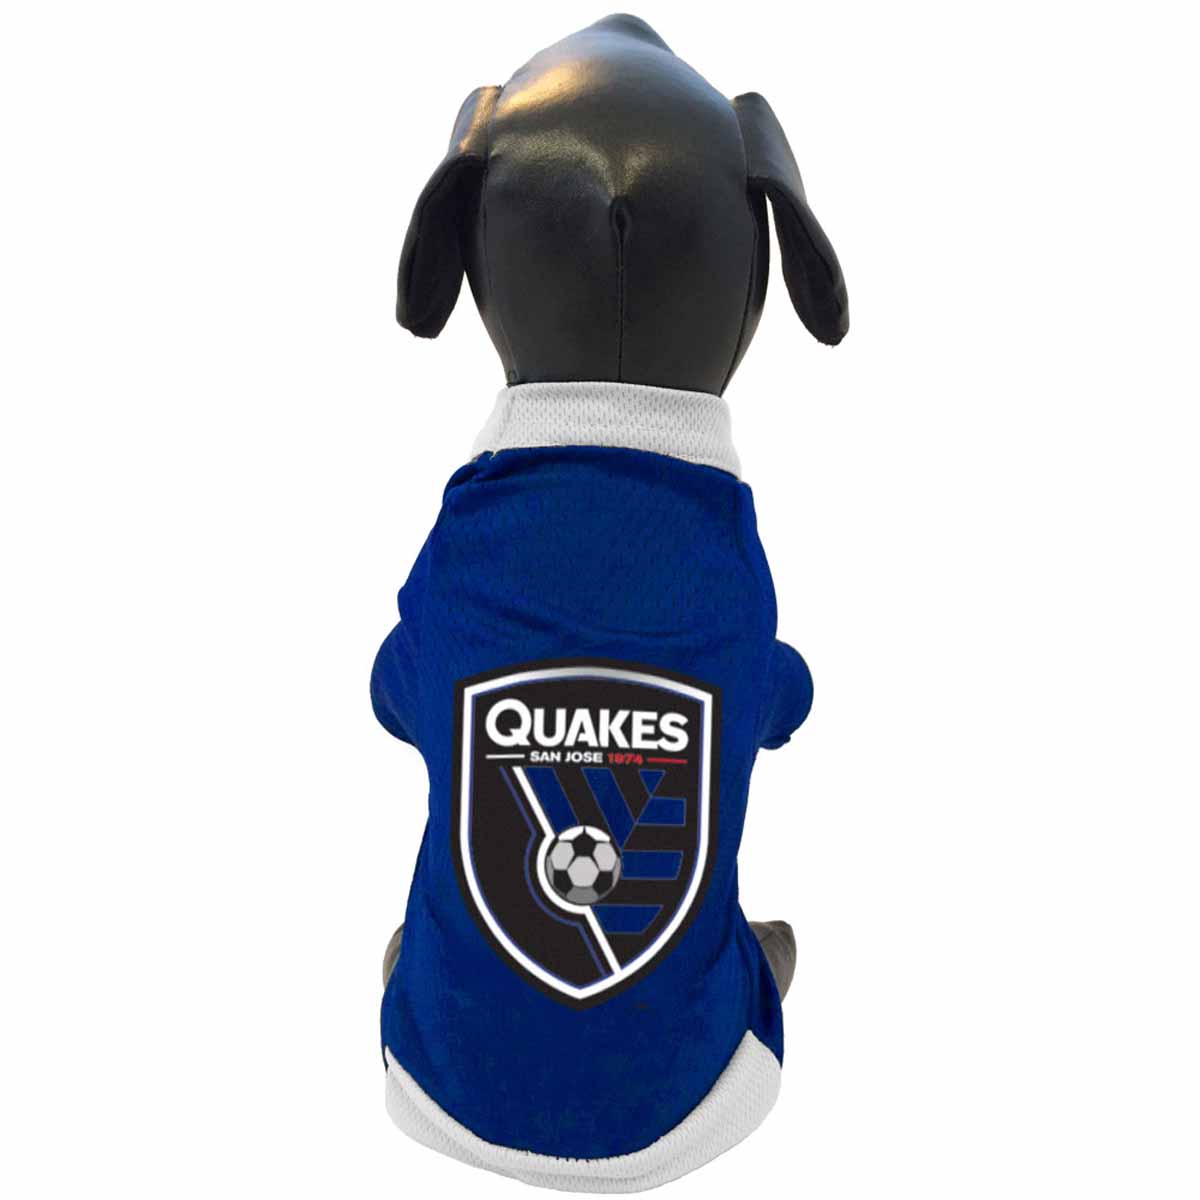 San Jose Earthquakes Athletic Mesh Dog Jersey